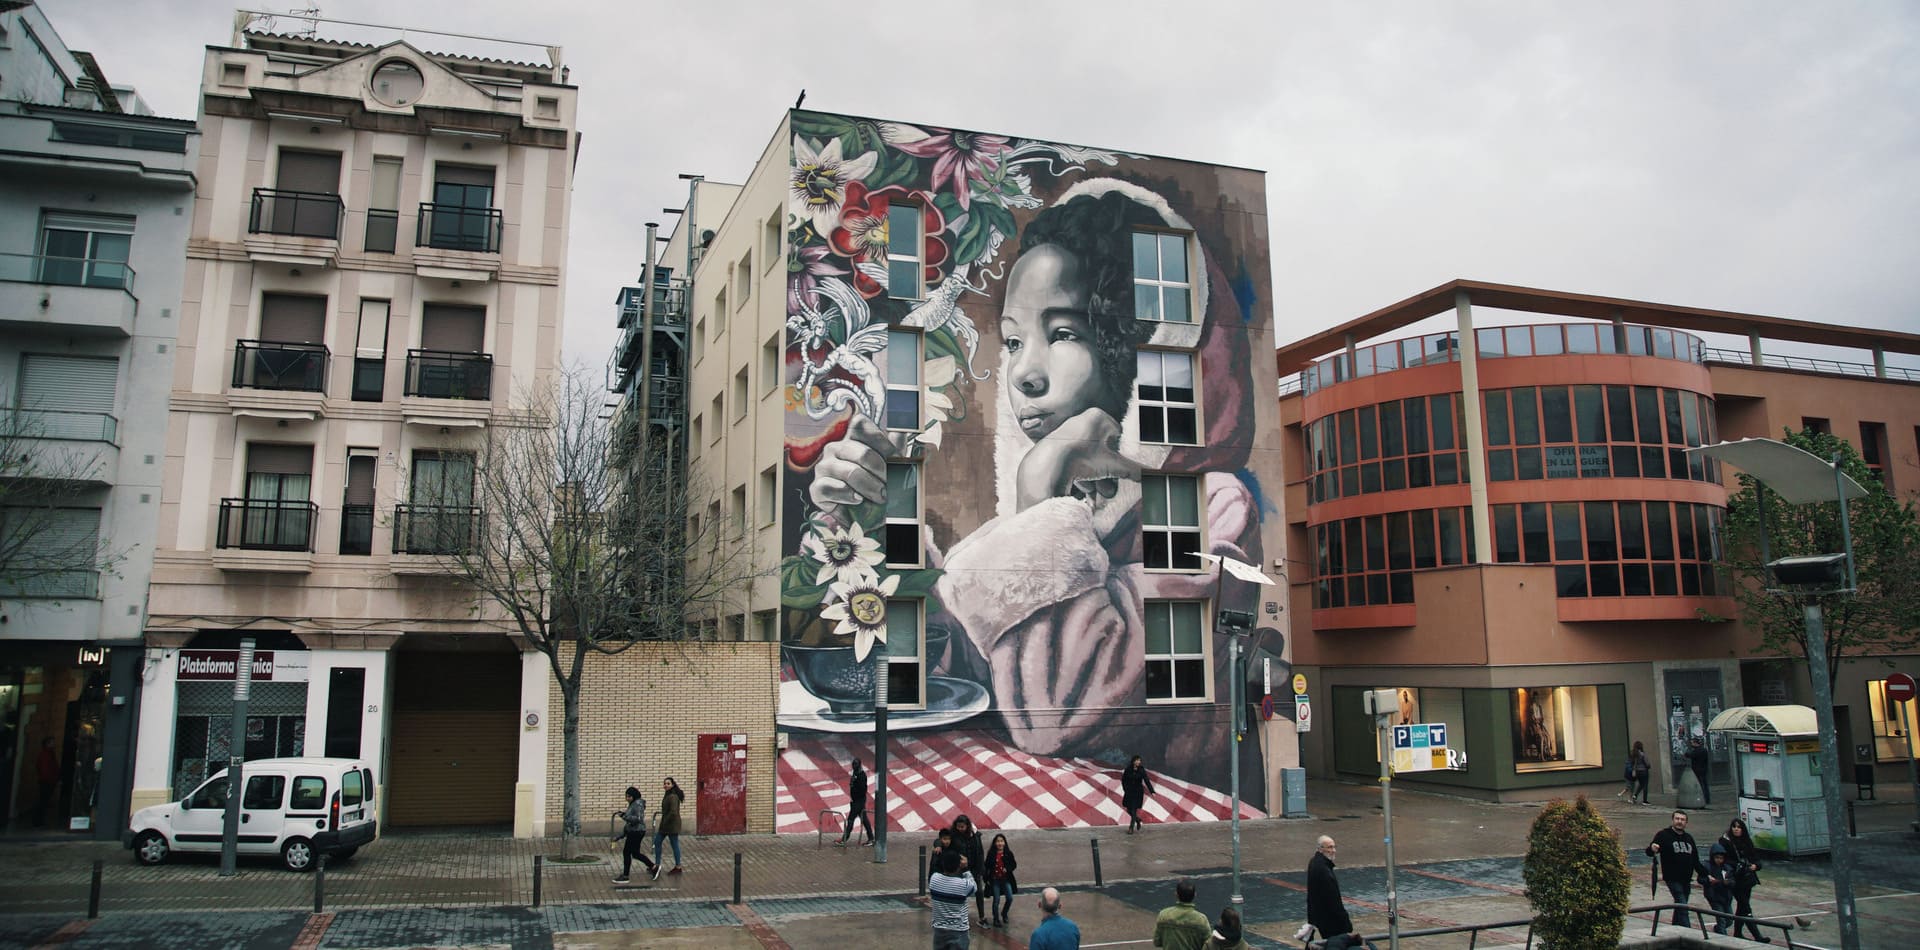 Womart mural by the artist Lula Goce, Vilanova i la Geltrú, 2018